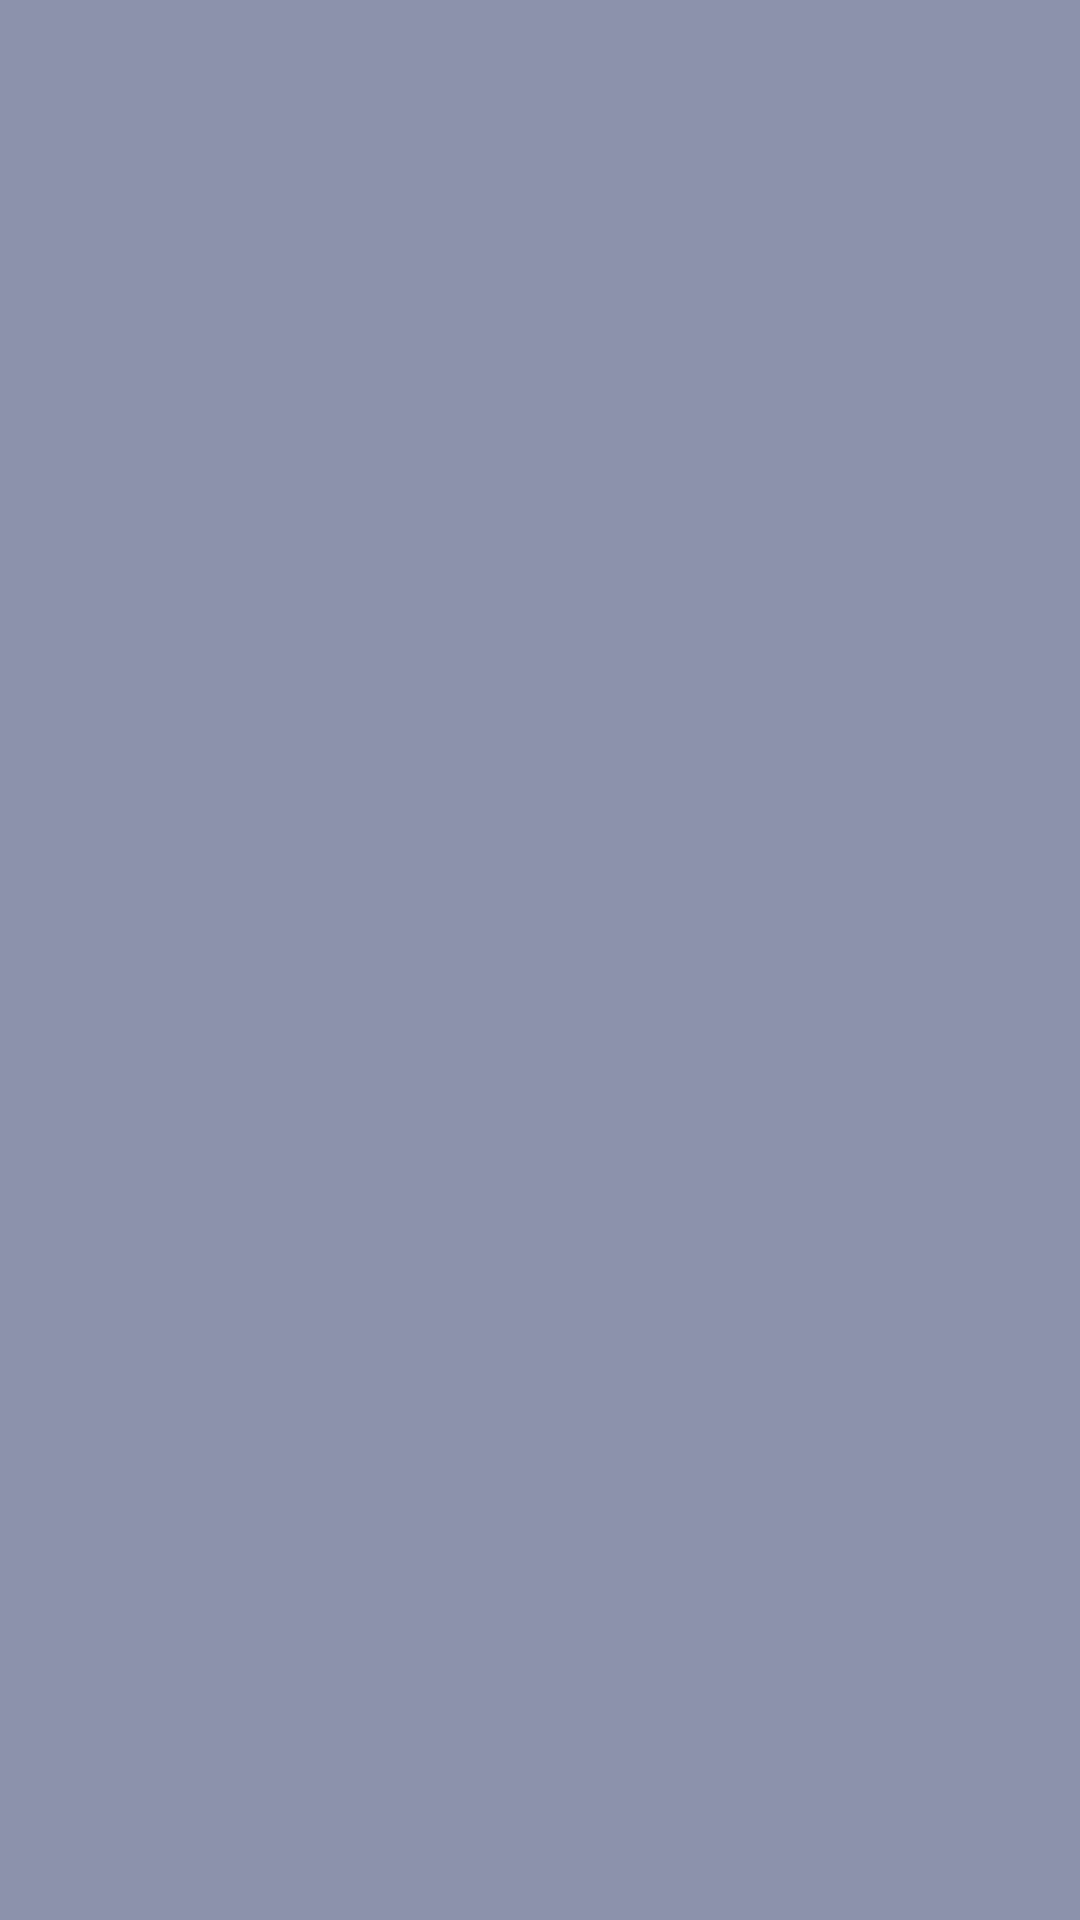 Bluish Solid Grey Color Background